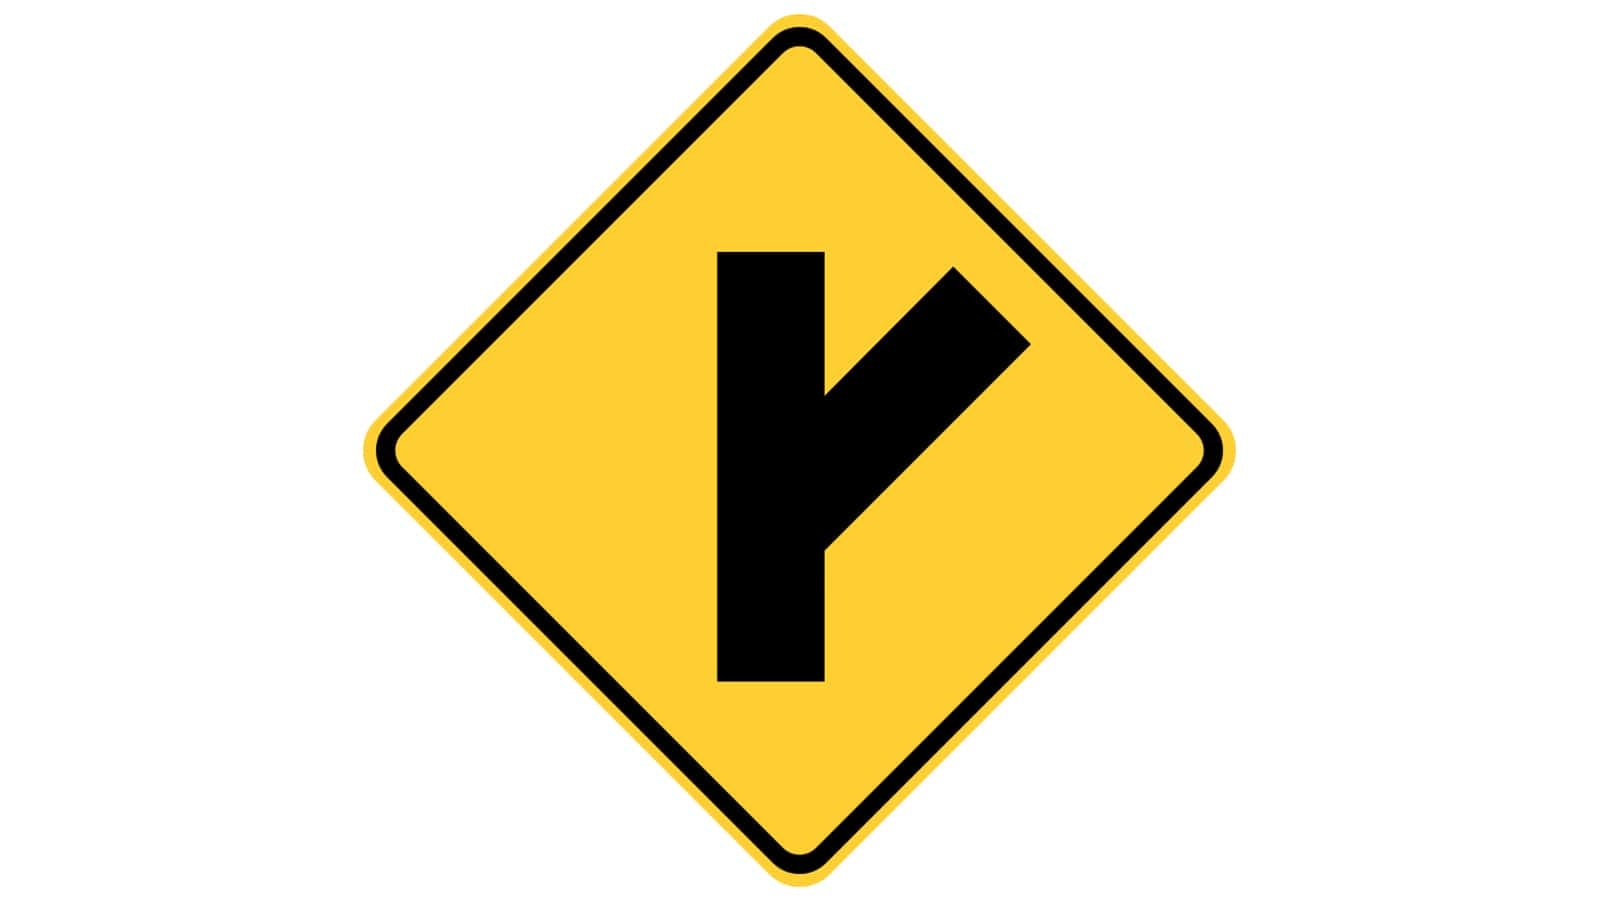 Warning sign Side Road at Acute Angle